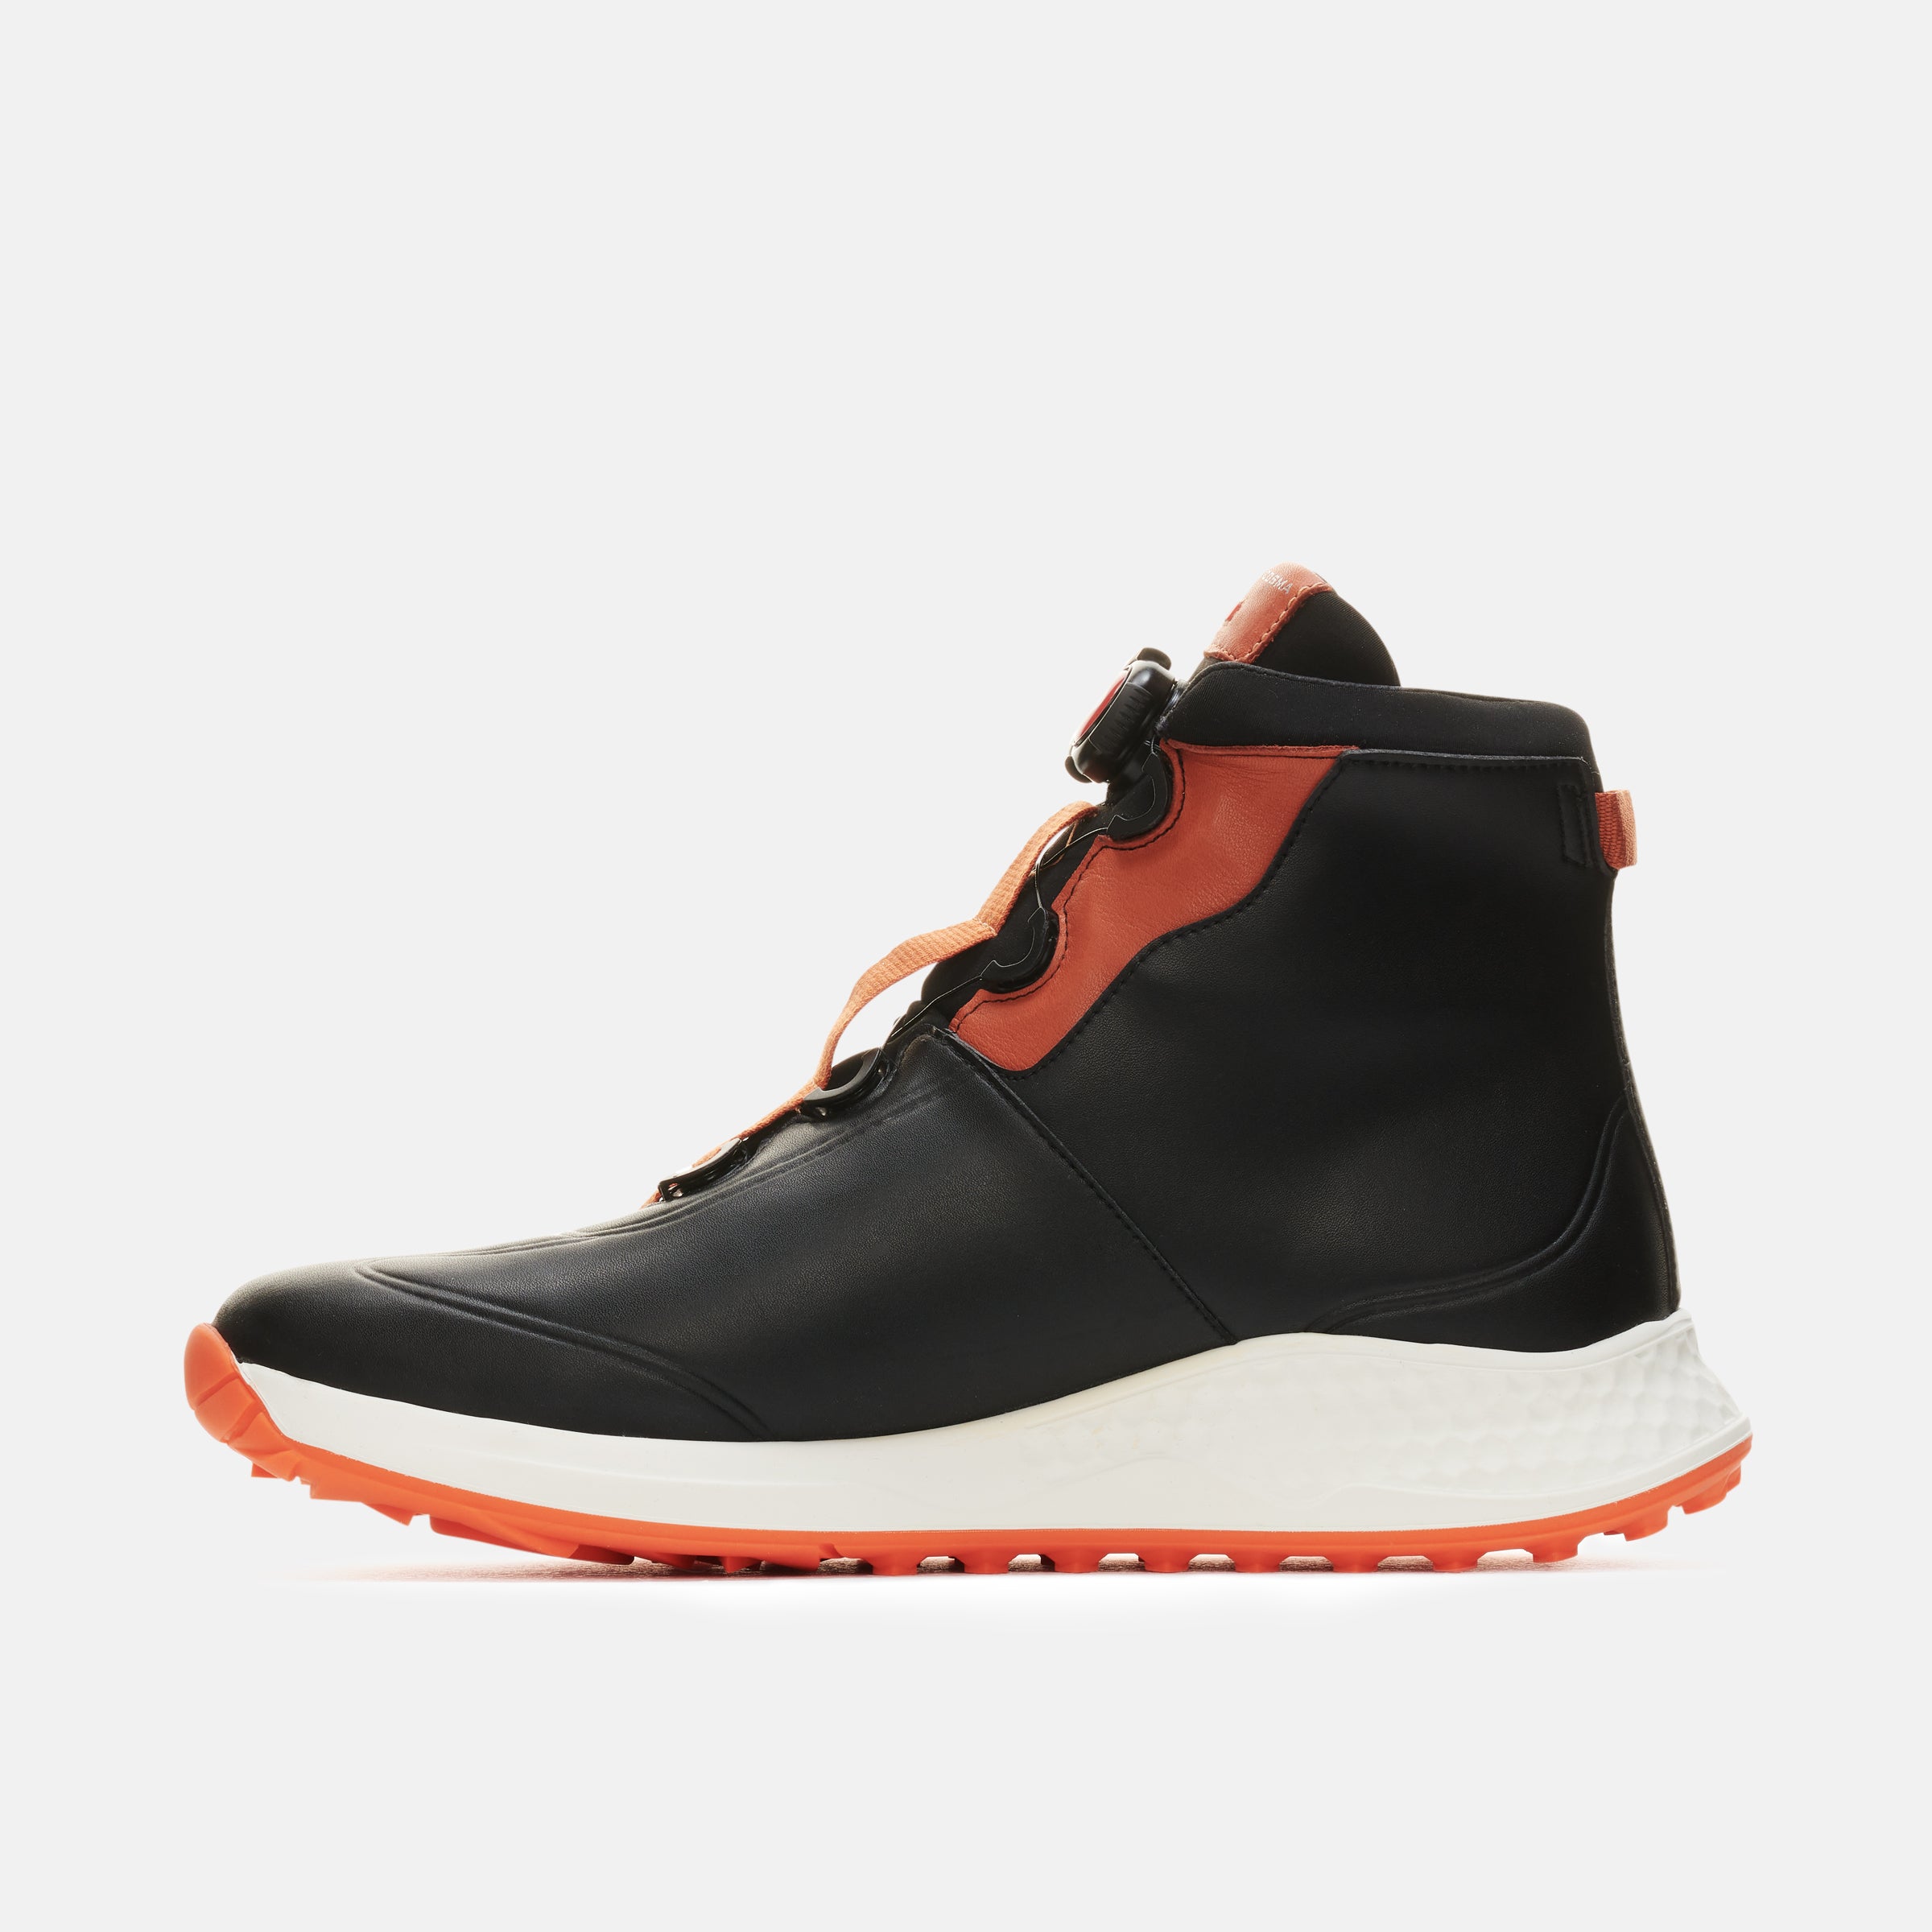 Duca Del Cosma Men's Bologna Golf Shoes, Size 9, Black/Orange